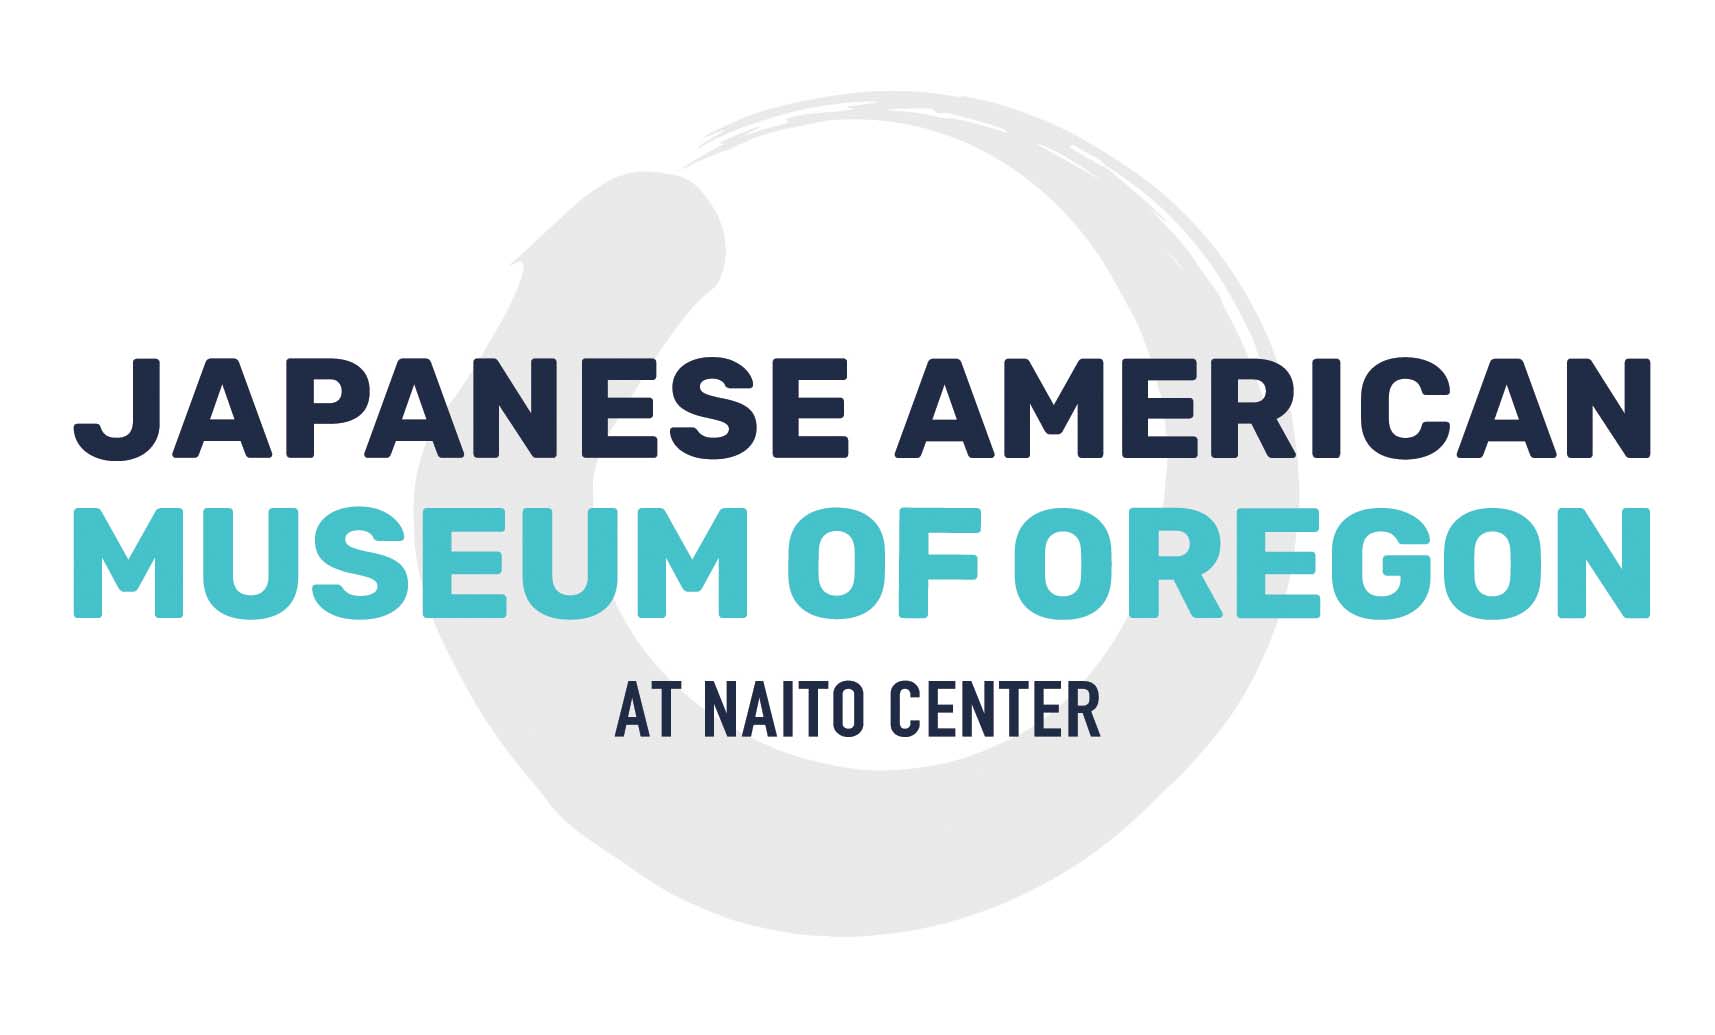 Japanese American Museum of Oregon